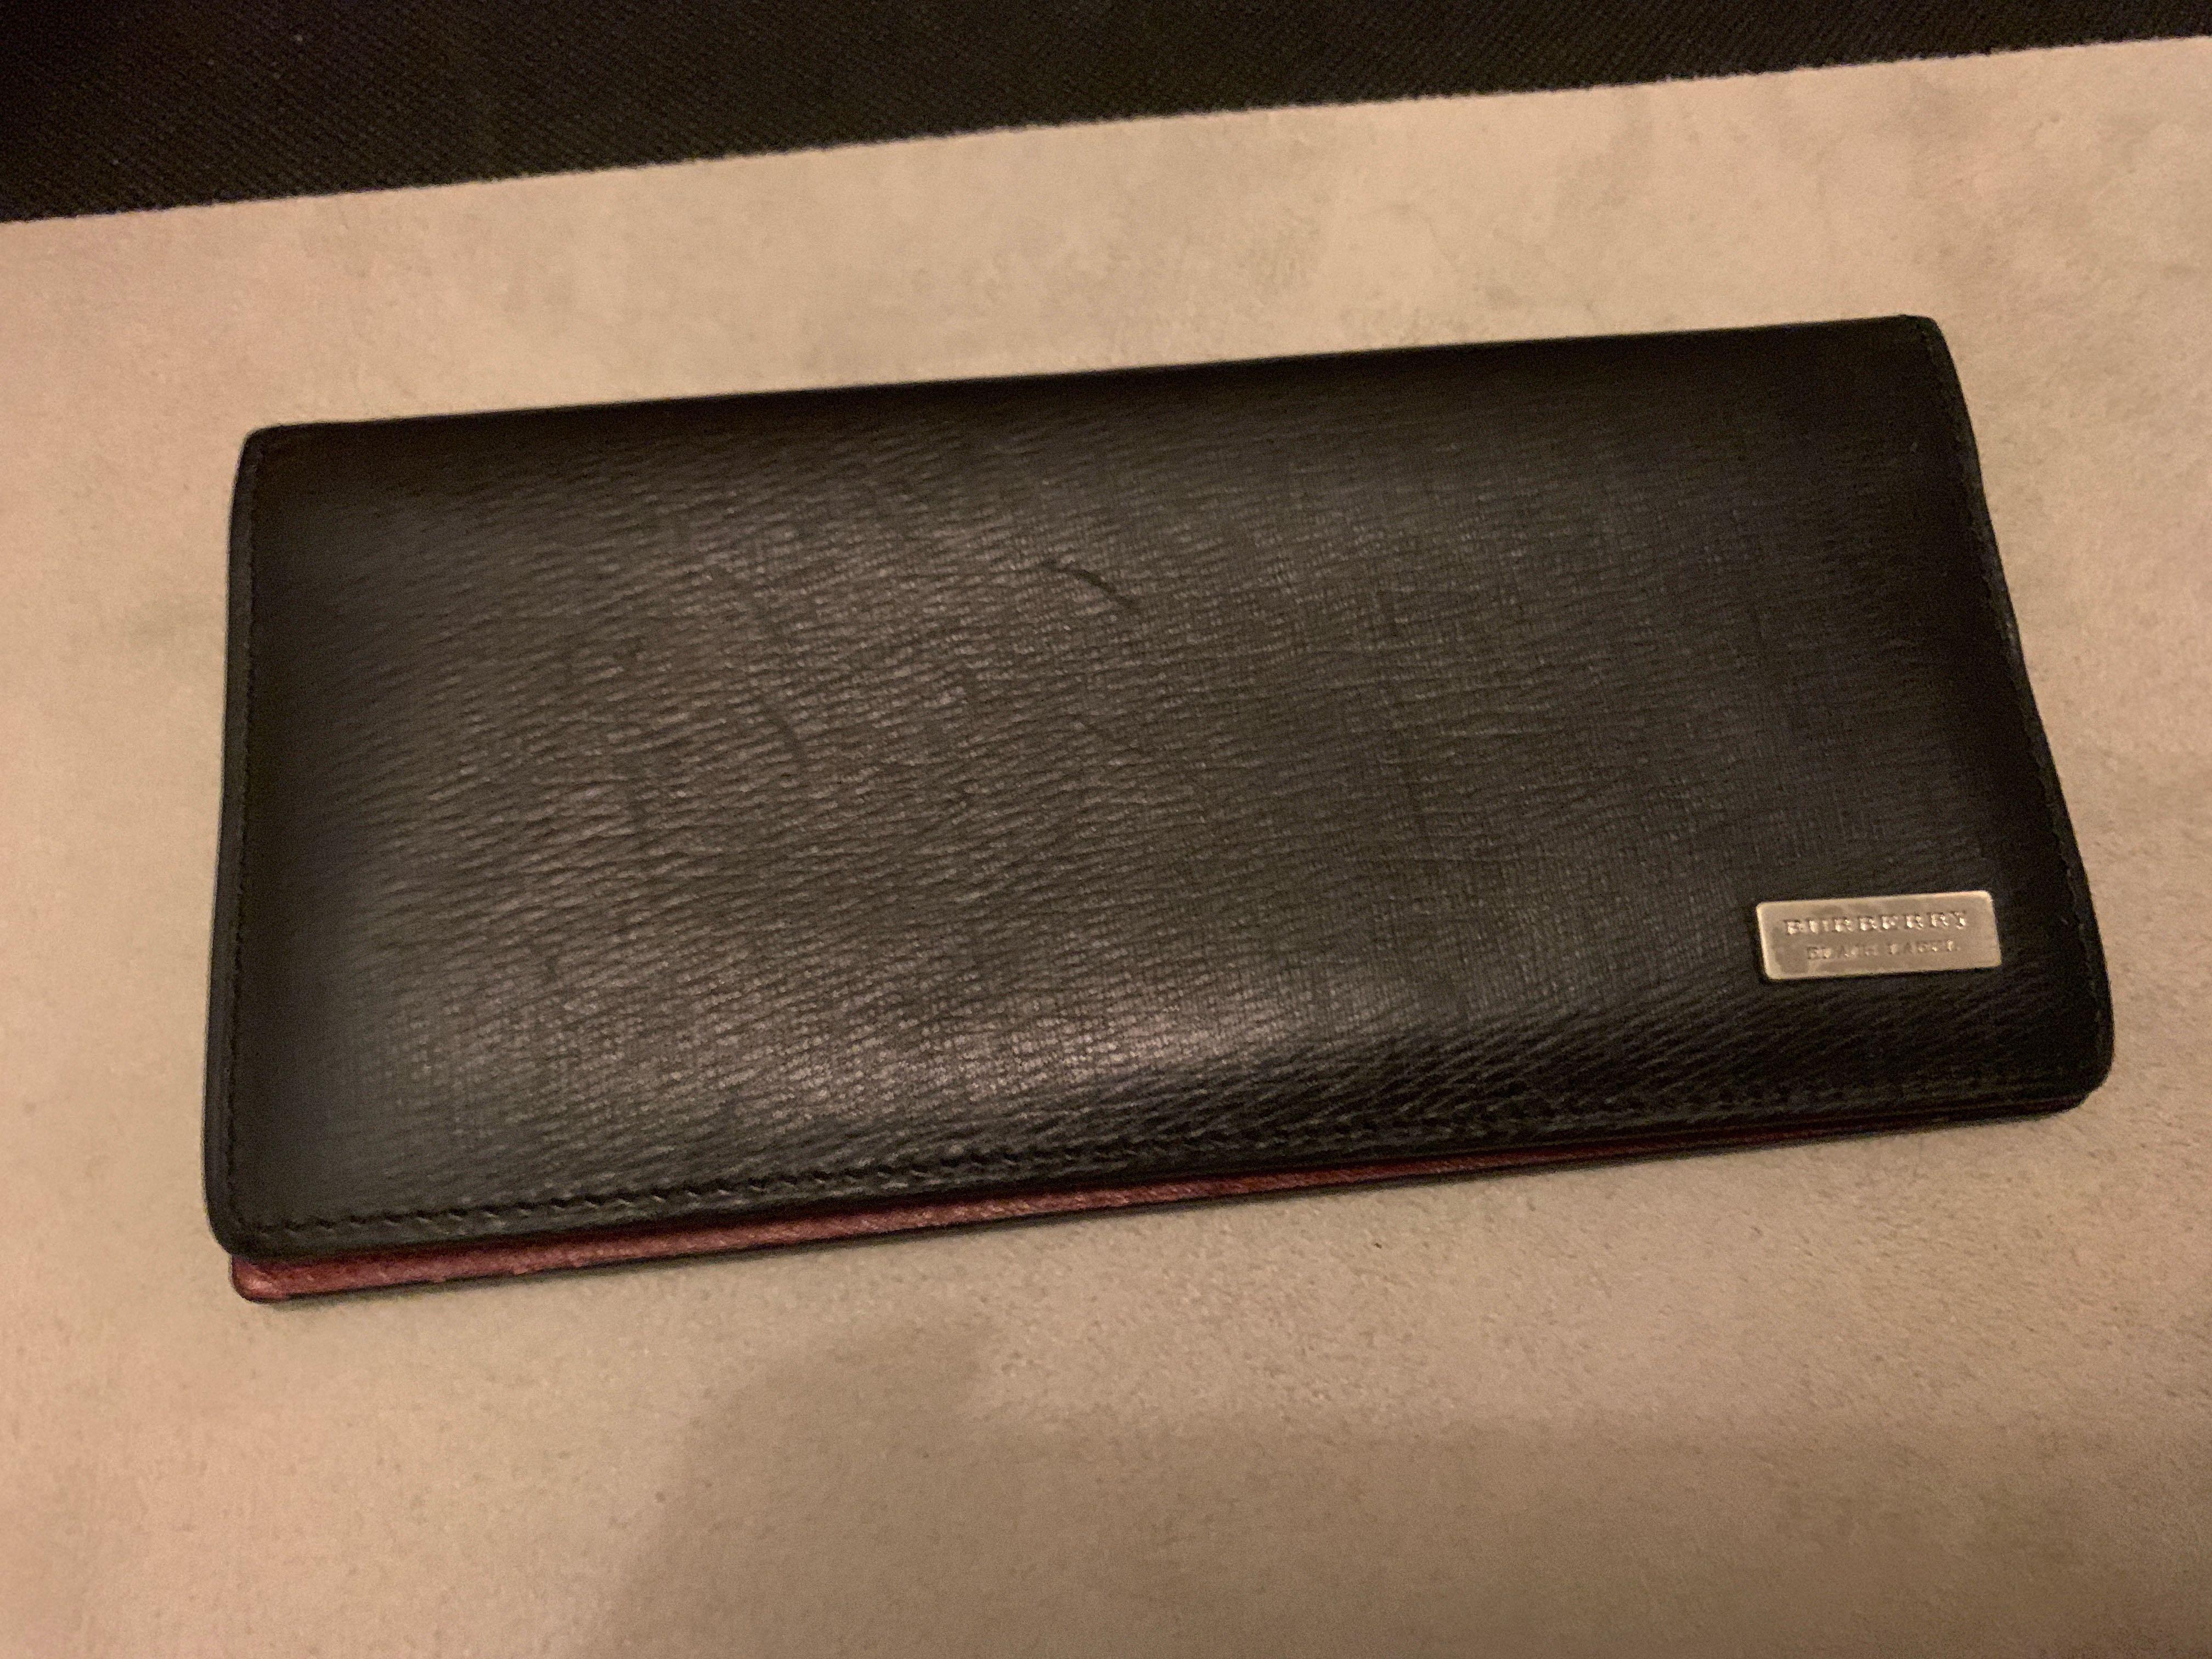 burberry mens bifold wallet